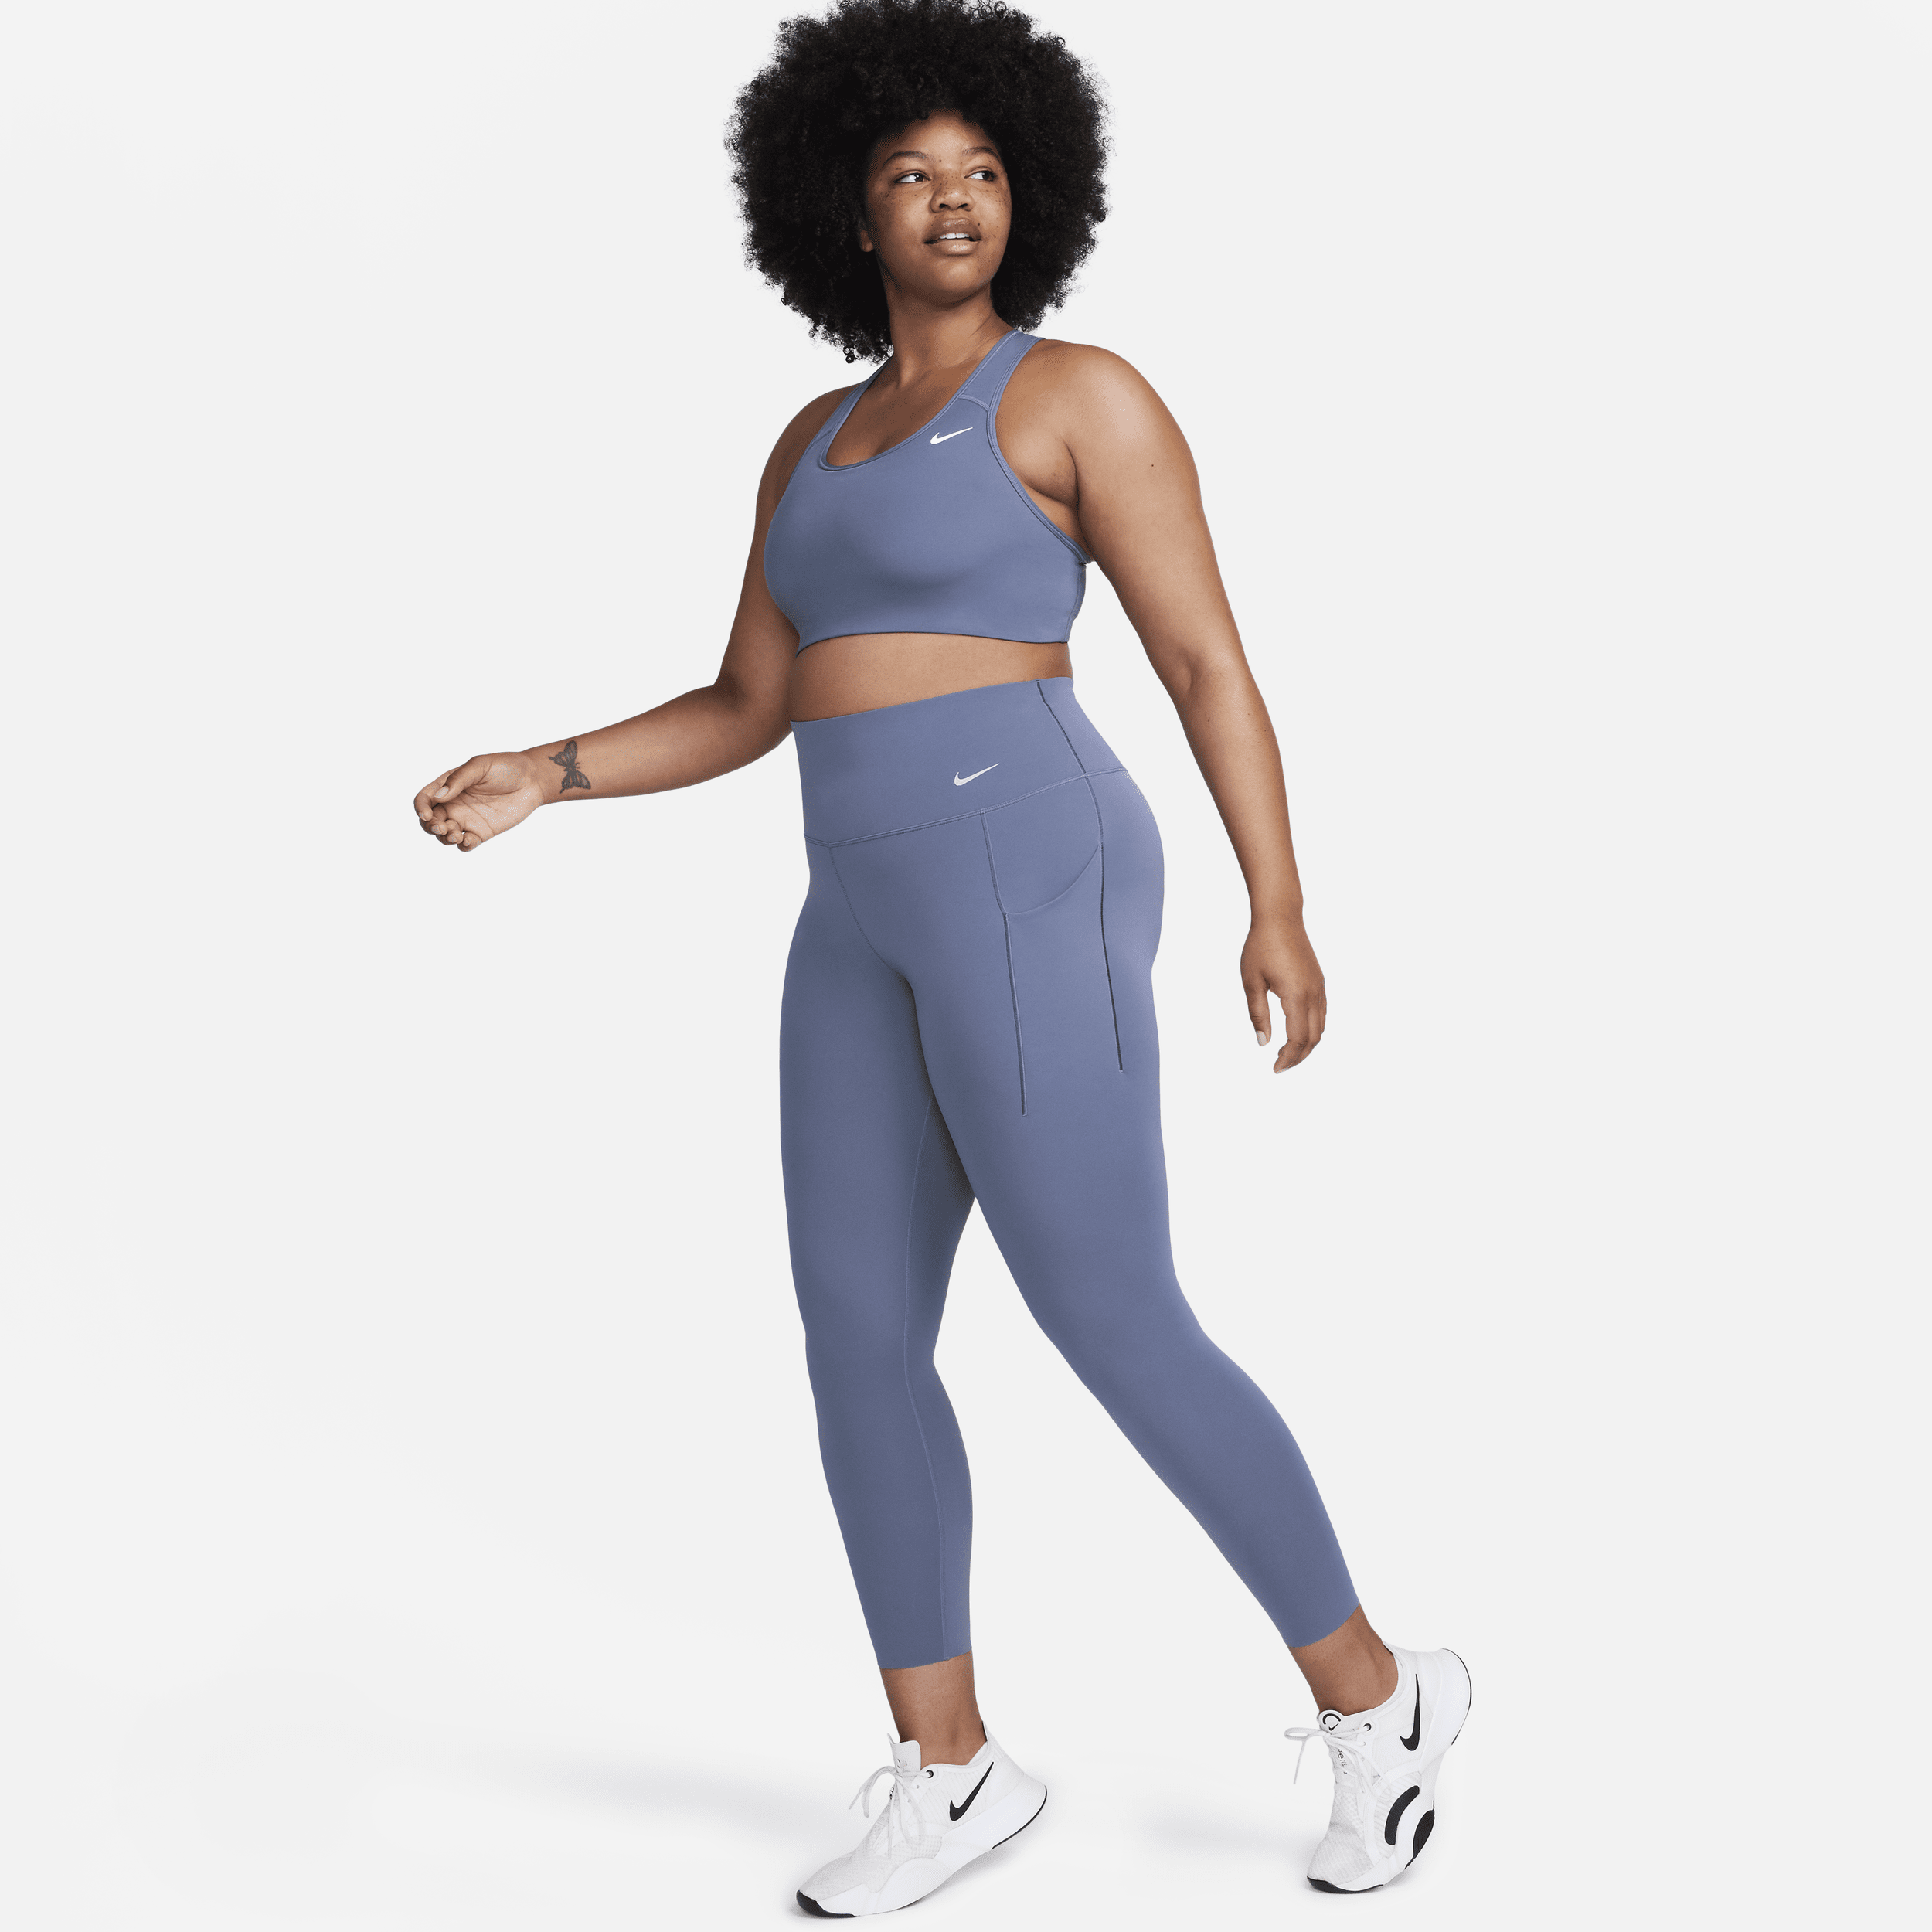 Nike Universa-leggings i 7/8 længde med medium støtte, høj talje og lommer til kvinder - blå